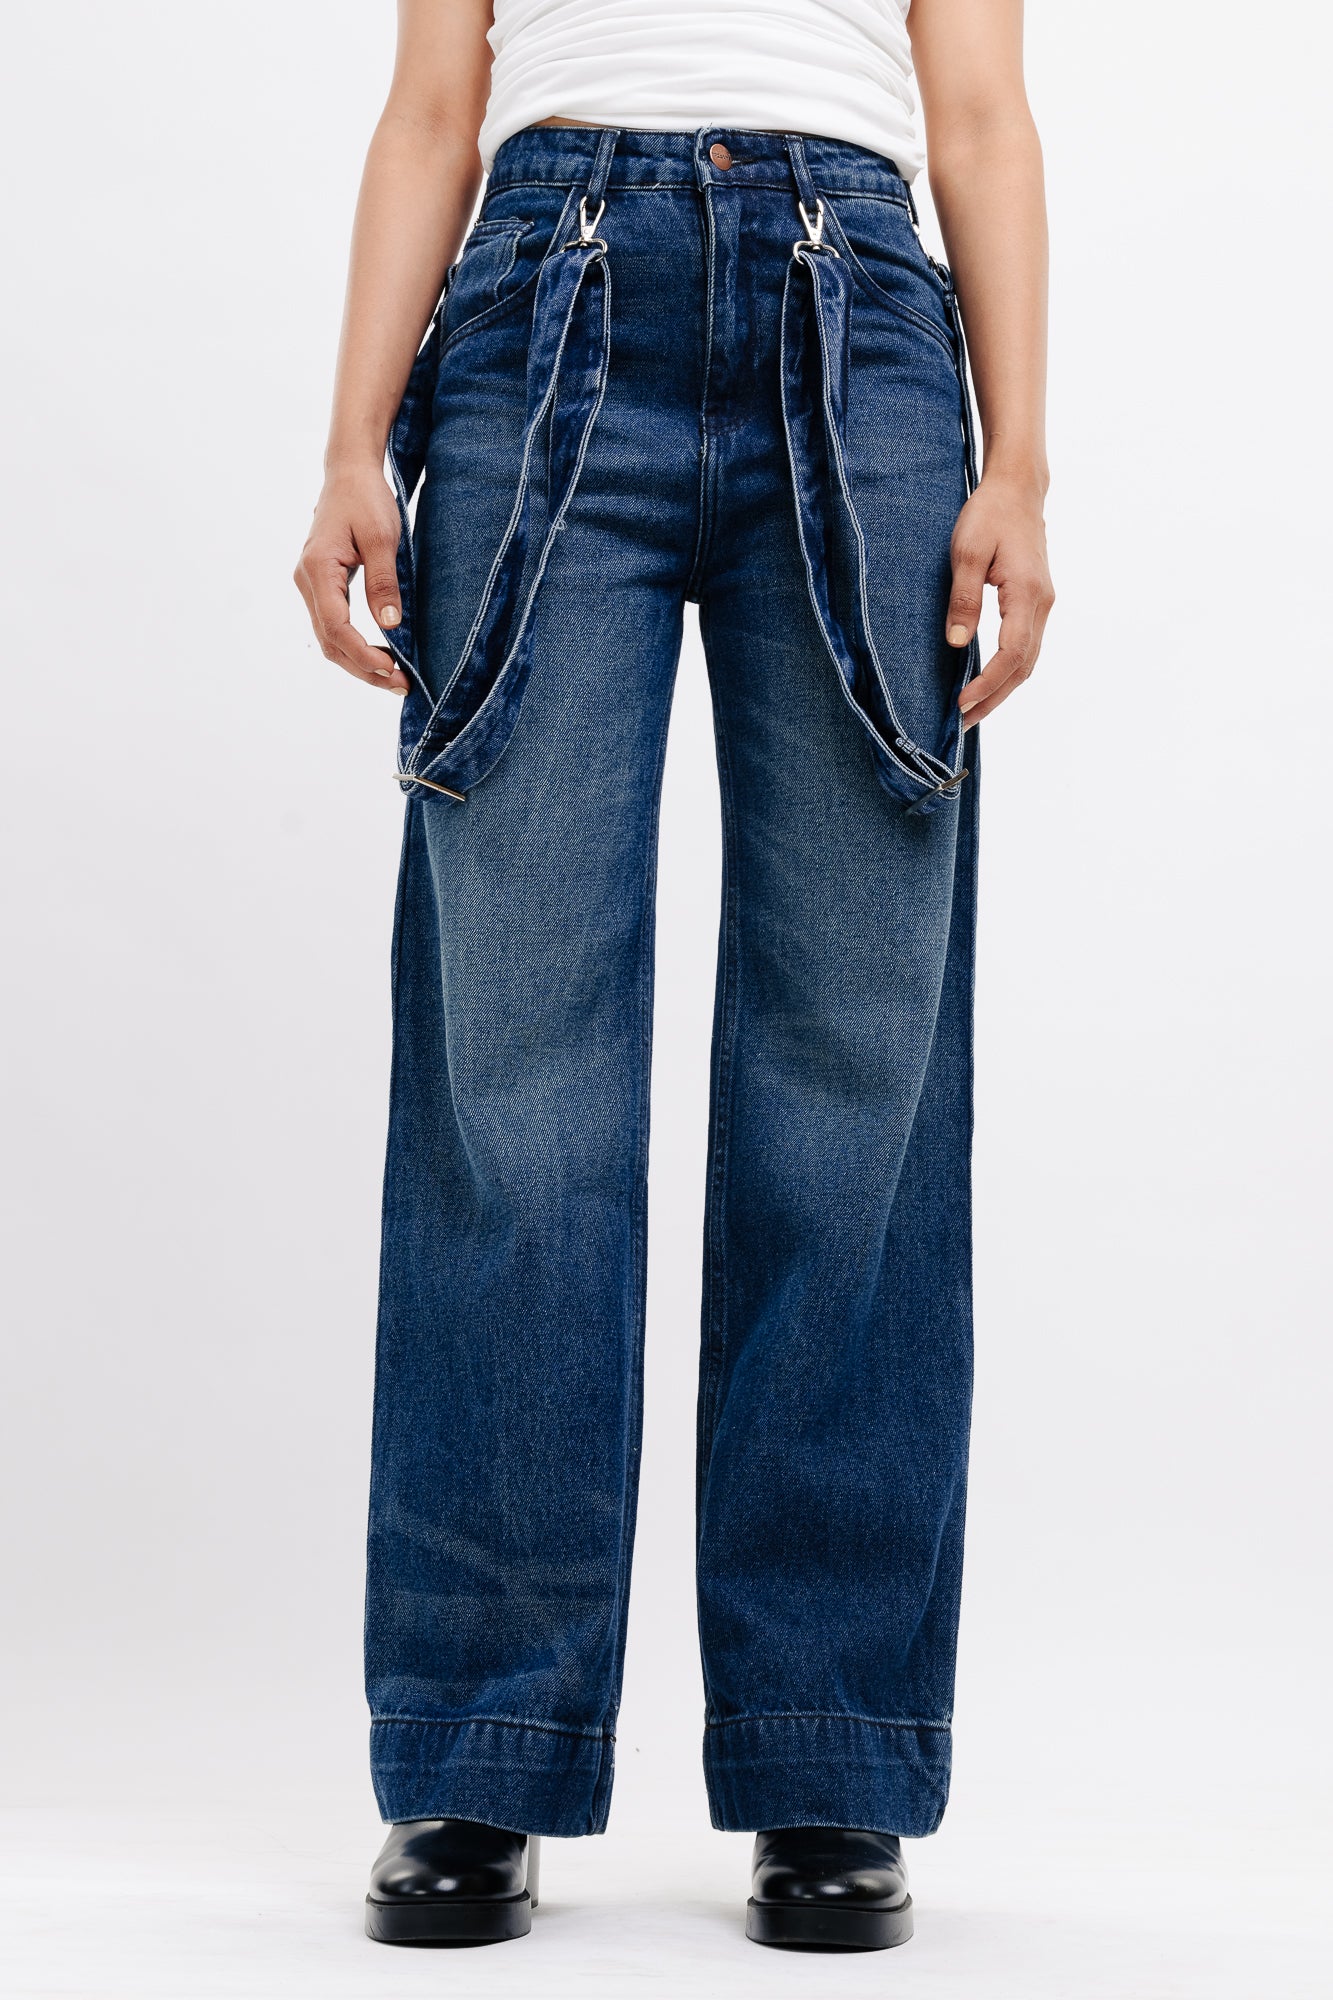 Jeans & Trousers | Koovs Blue Torn Skinny Fit Jeans (Womens) | Freeup